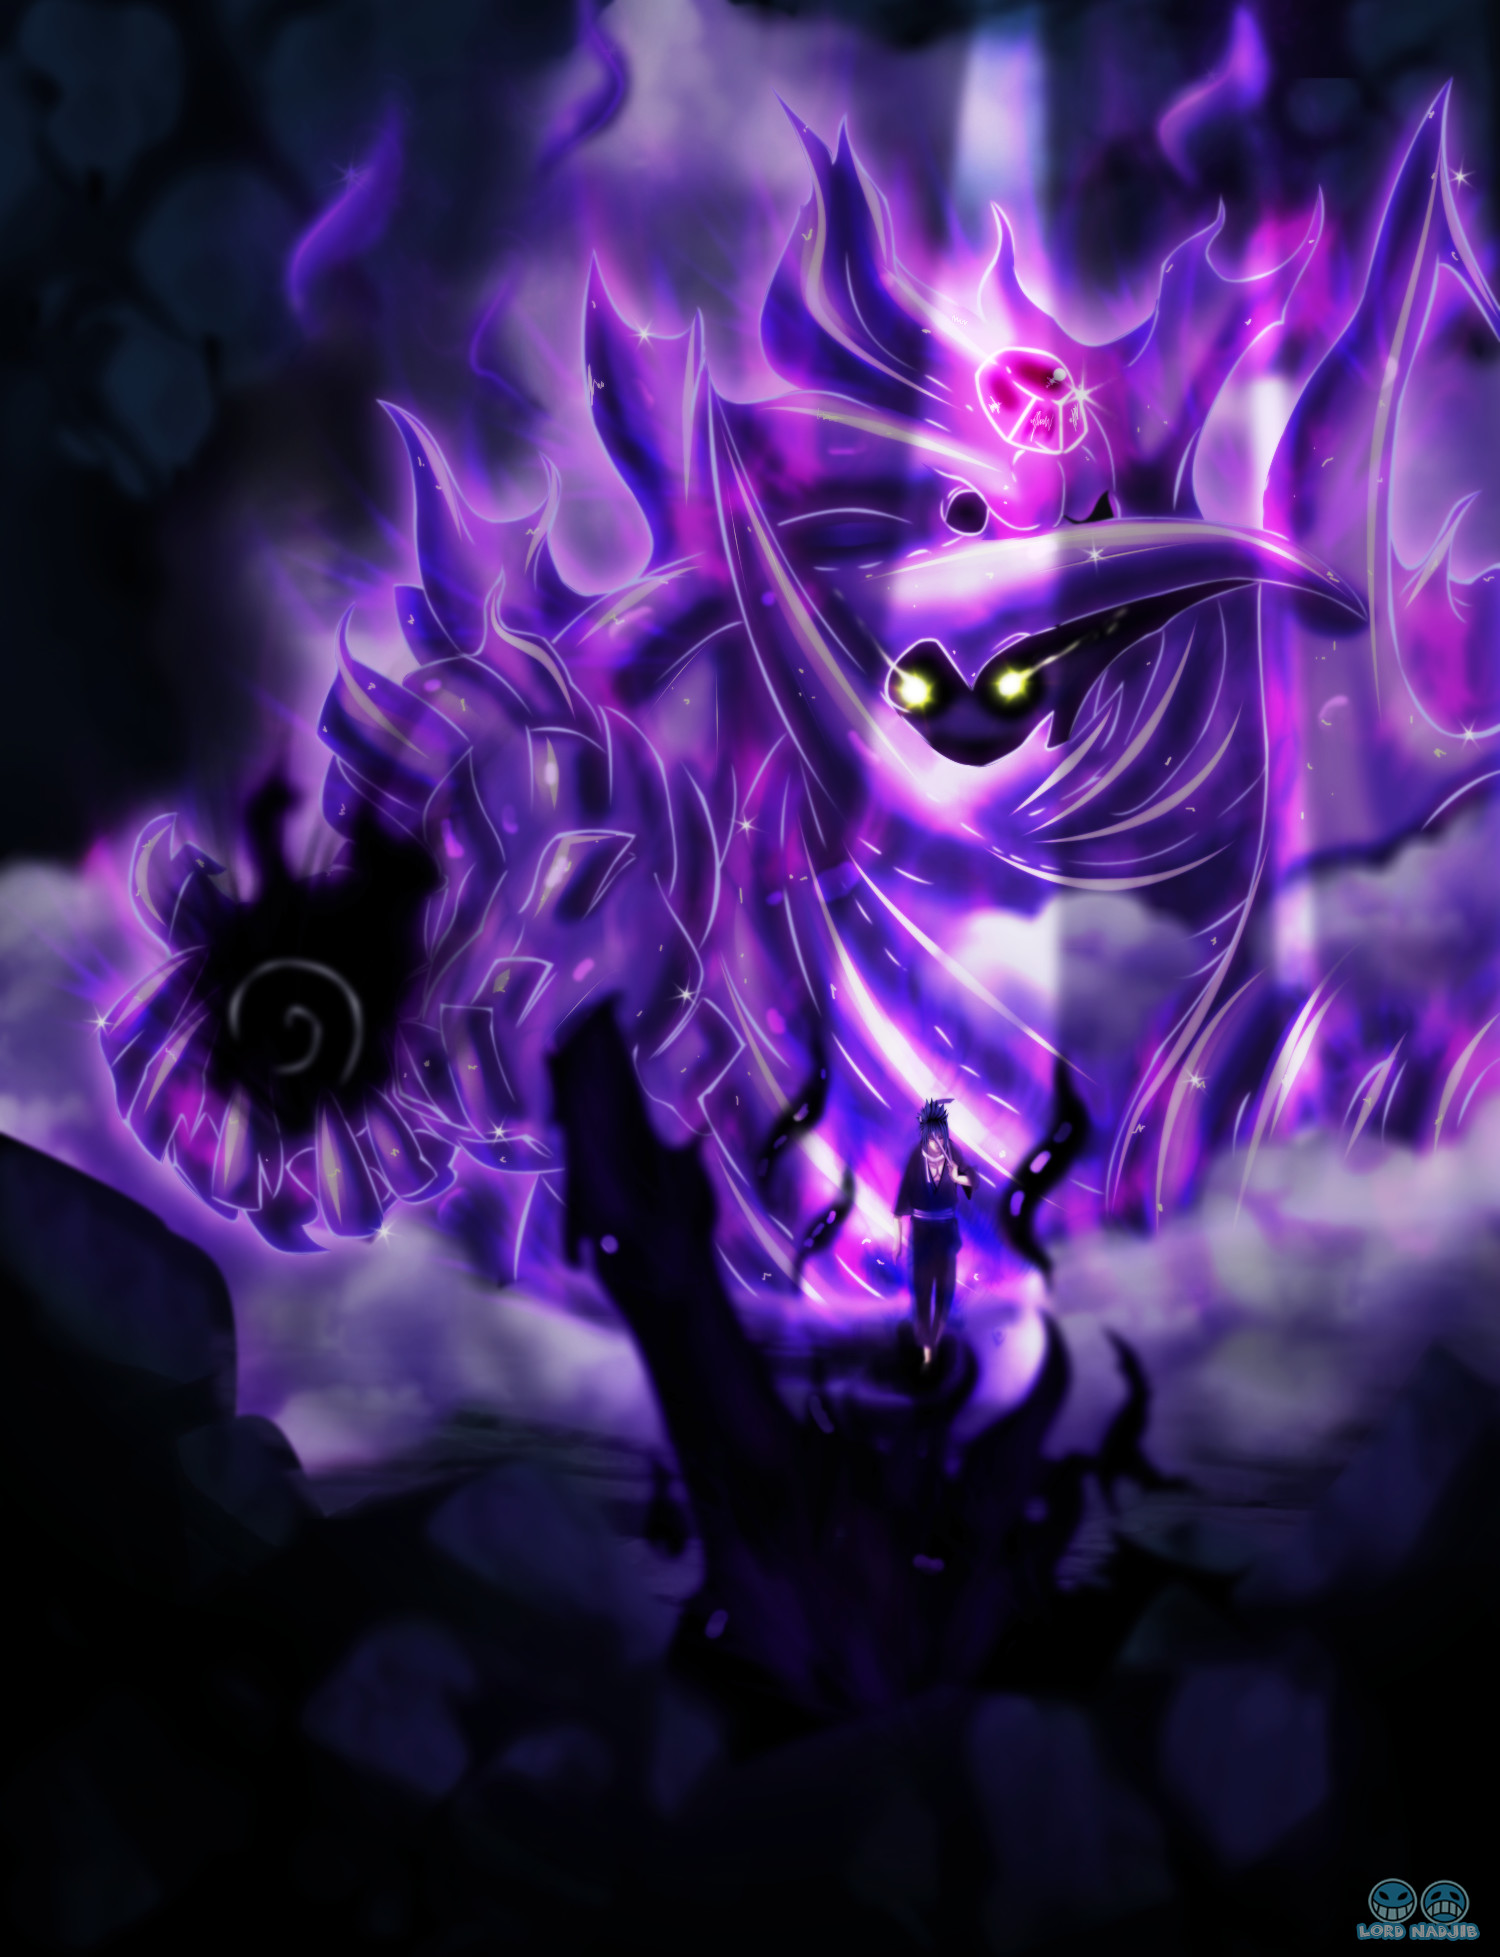 sasuke susanoo wallpaper hd,purple,violet,cg artwork,fictional character,graphic design